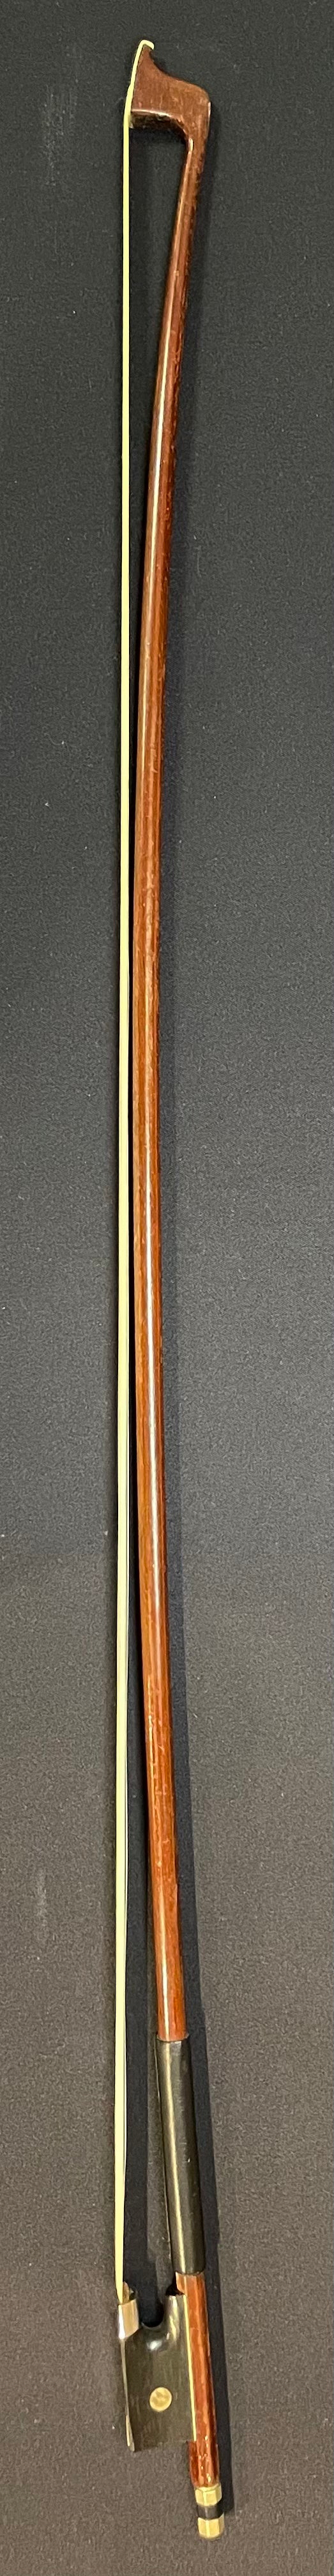 4/4 Violin Bow - MYQ Wood Model